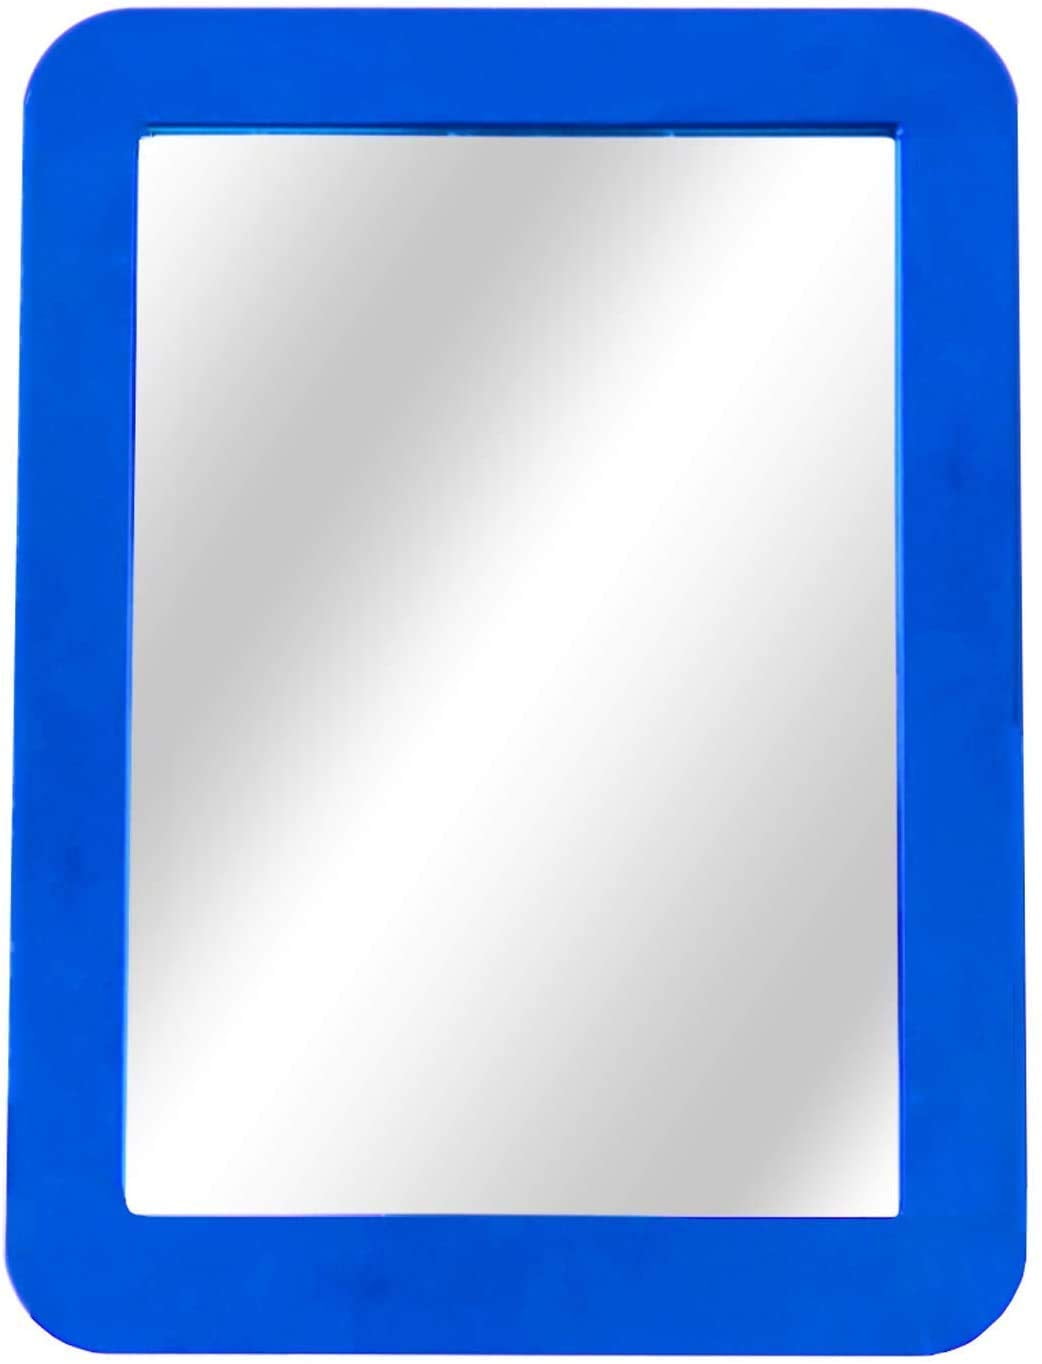 Magnetic Mirror - Locker Mirror - 5 x 7- for School Locker, Bathroom,  Household Refrigerator, Locker Accessory, Workshop Toolbox or Office  Cabinet